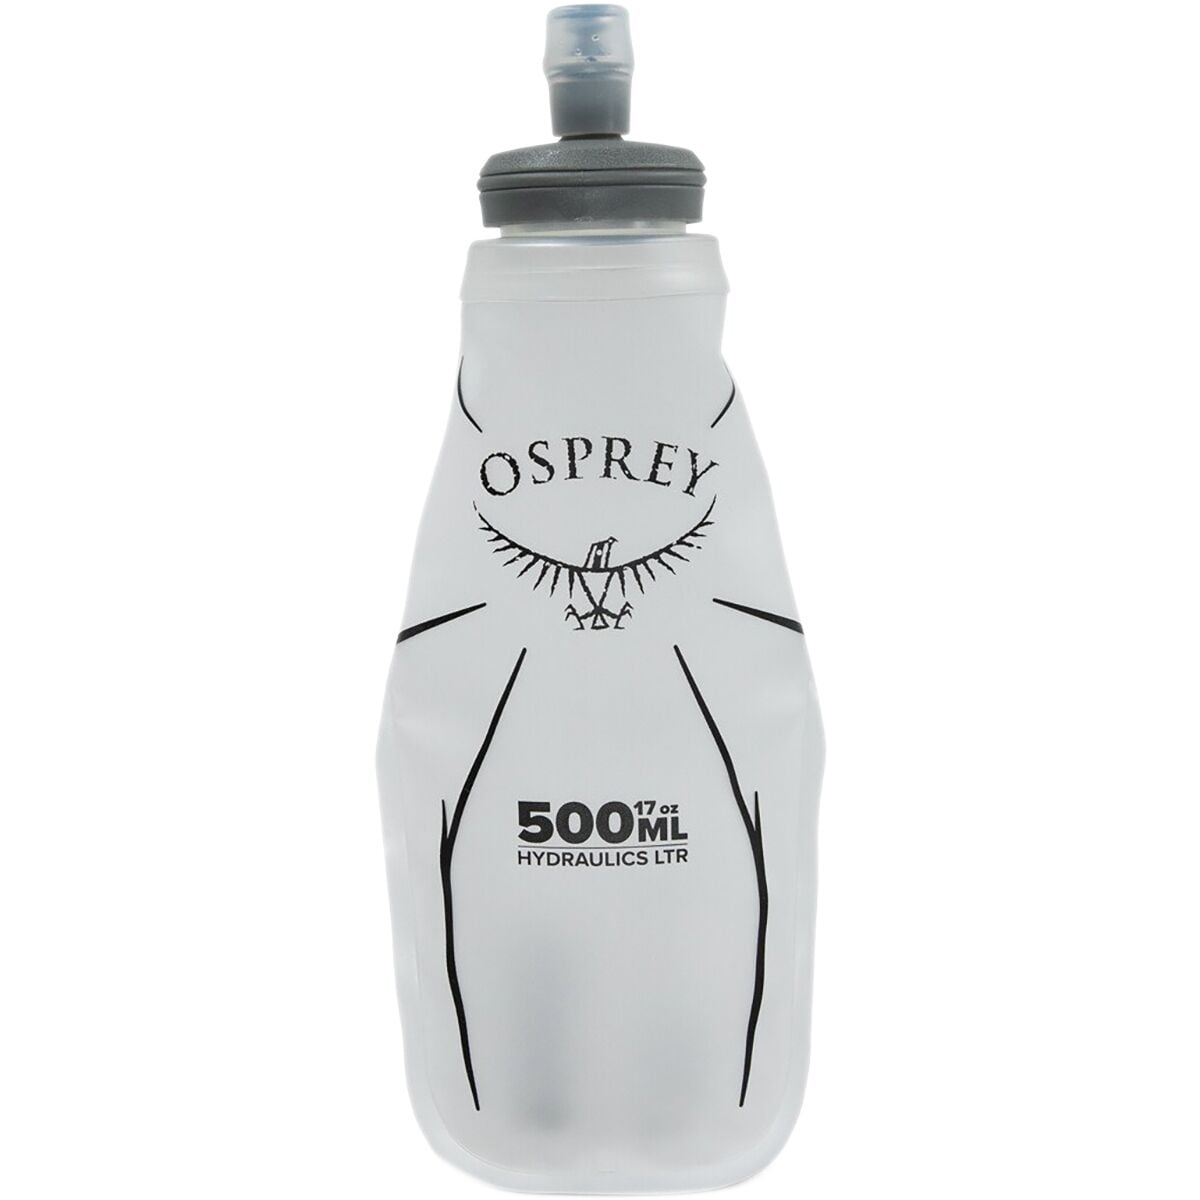 Osprey Packs 500ml Soft Flask